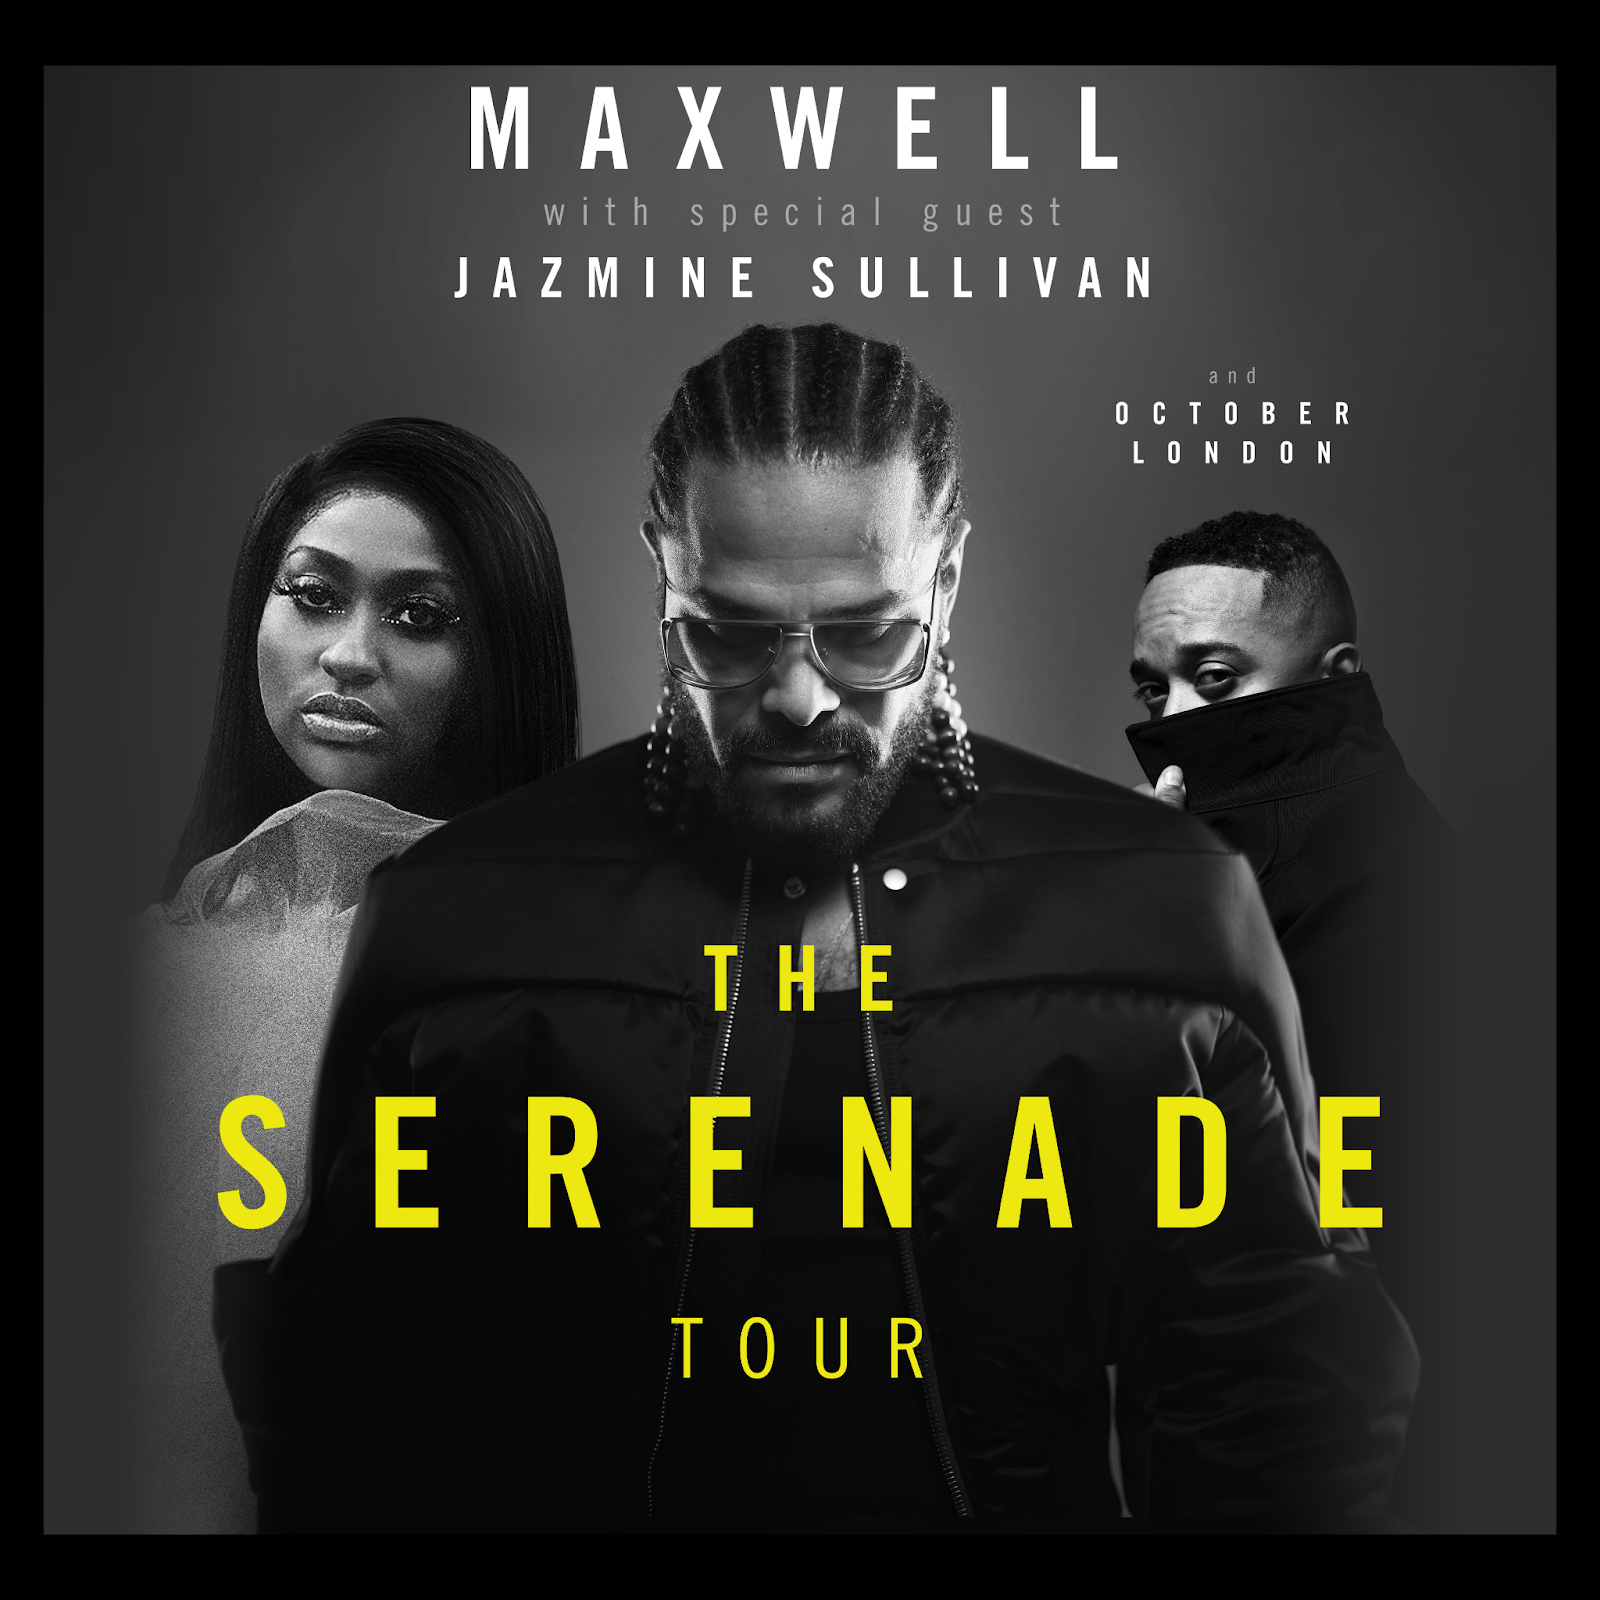 Maxwell announces tour dates